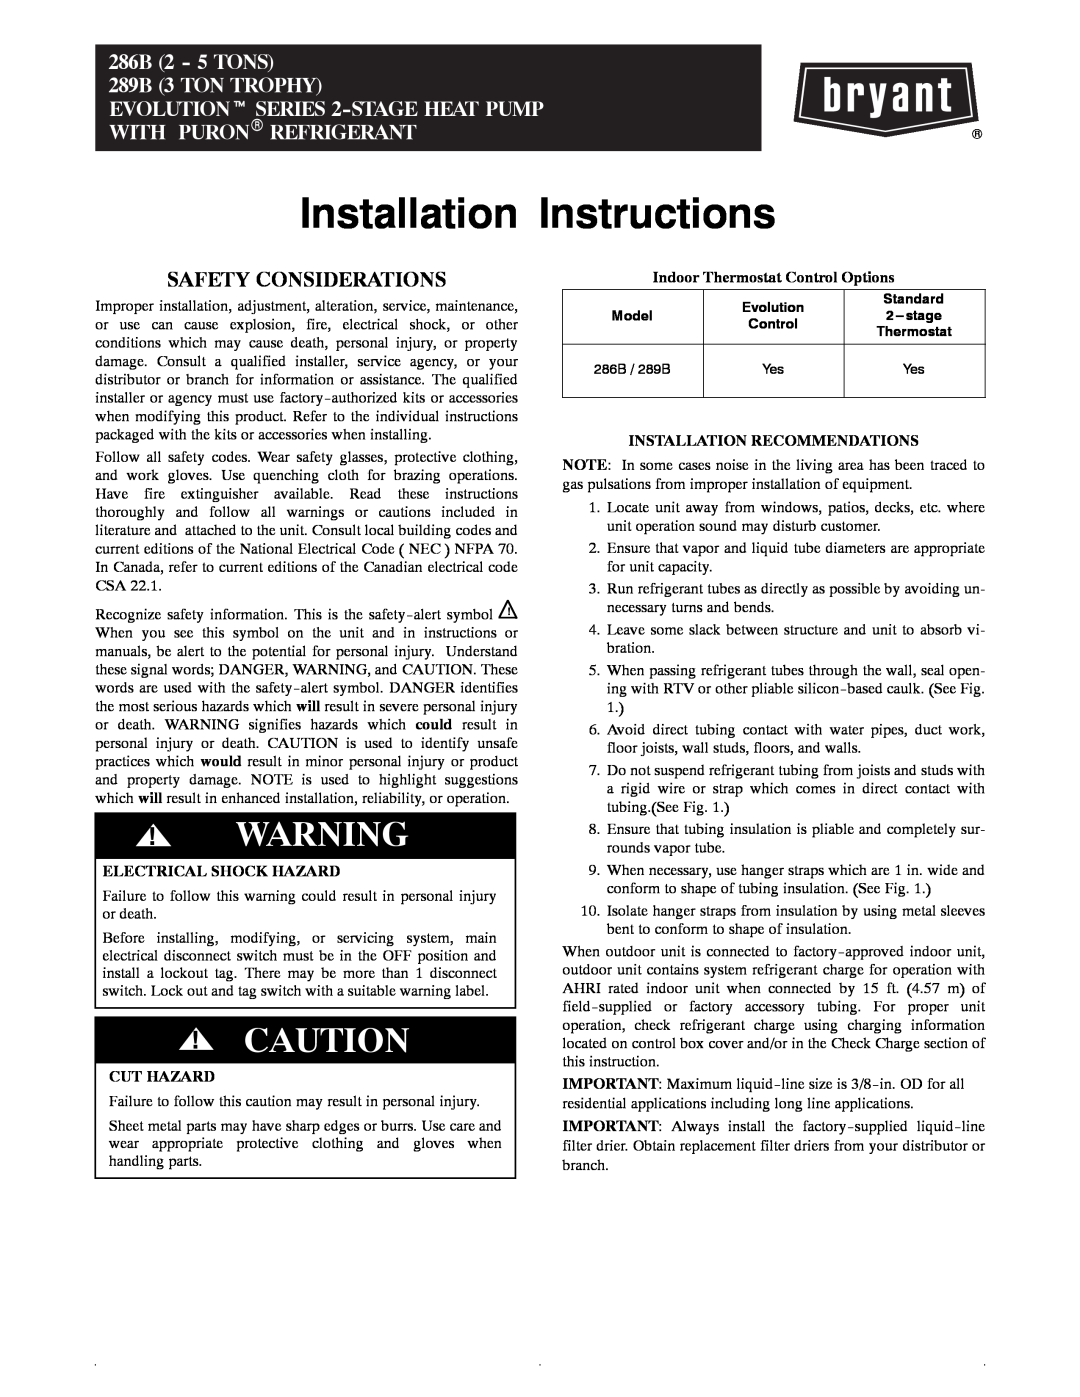 Bryant 289B, 286B installation instructions Electrical Shock Hazard, Cut Hazard, Indoor Thermostat Control Options 